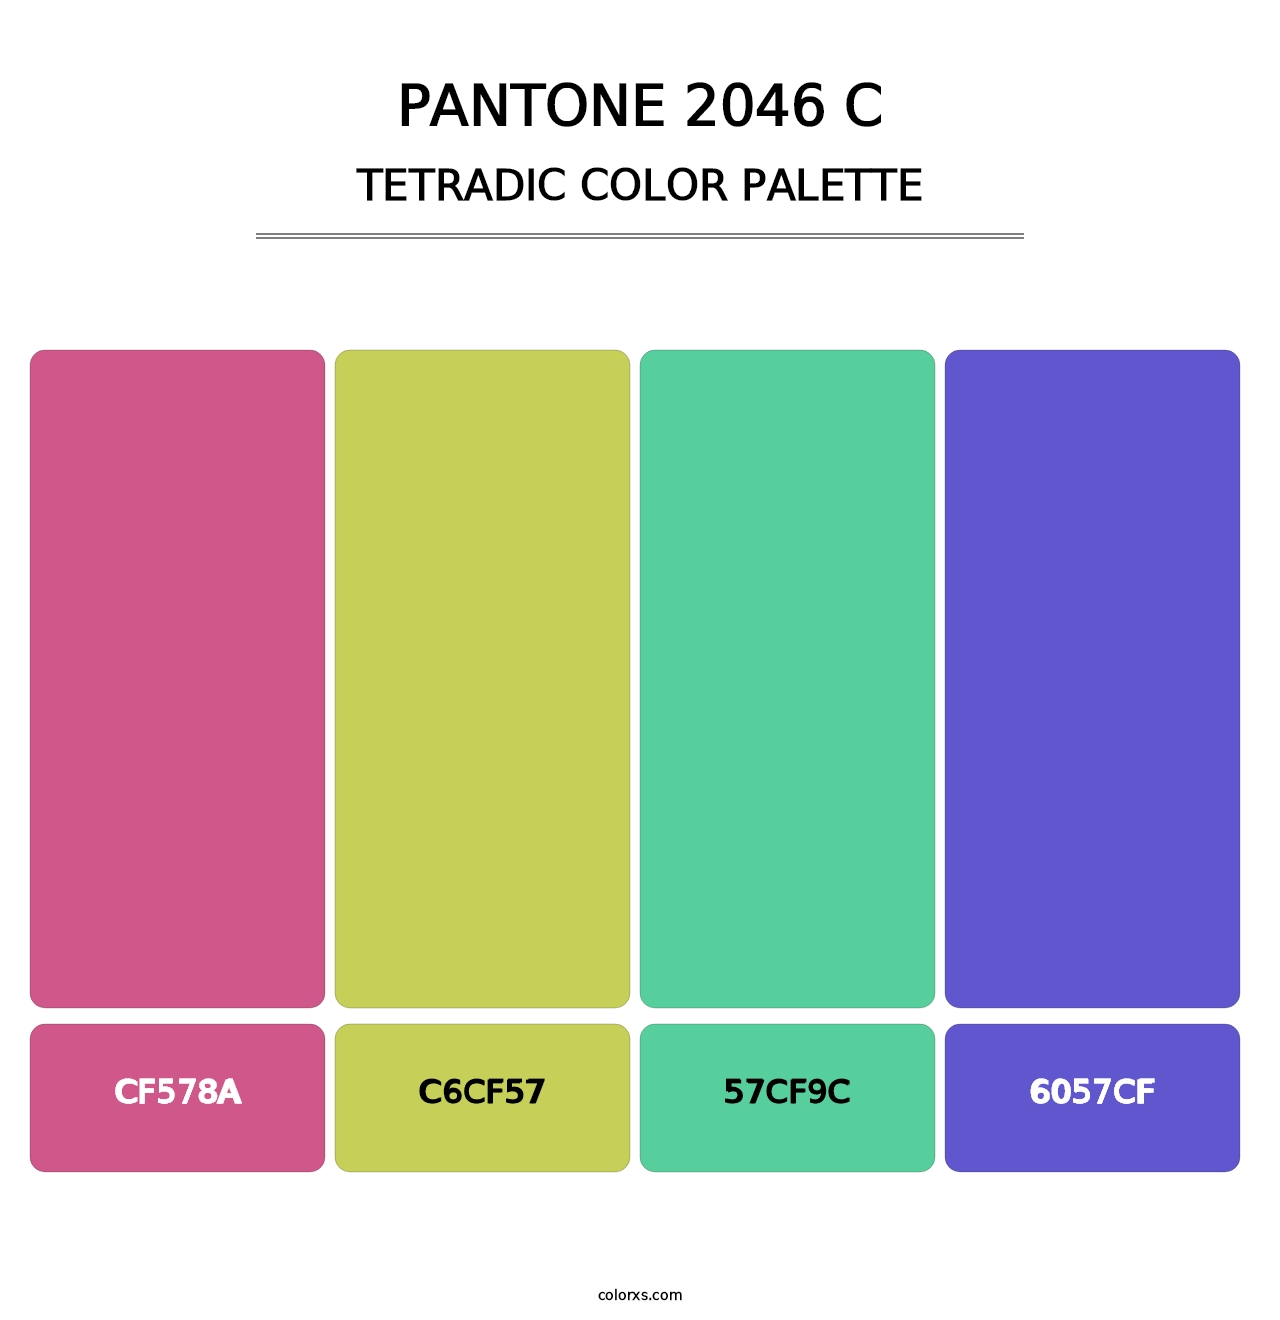 PANTONE 2046 C - Tetradic Color Palette